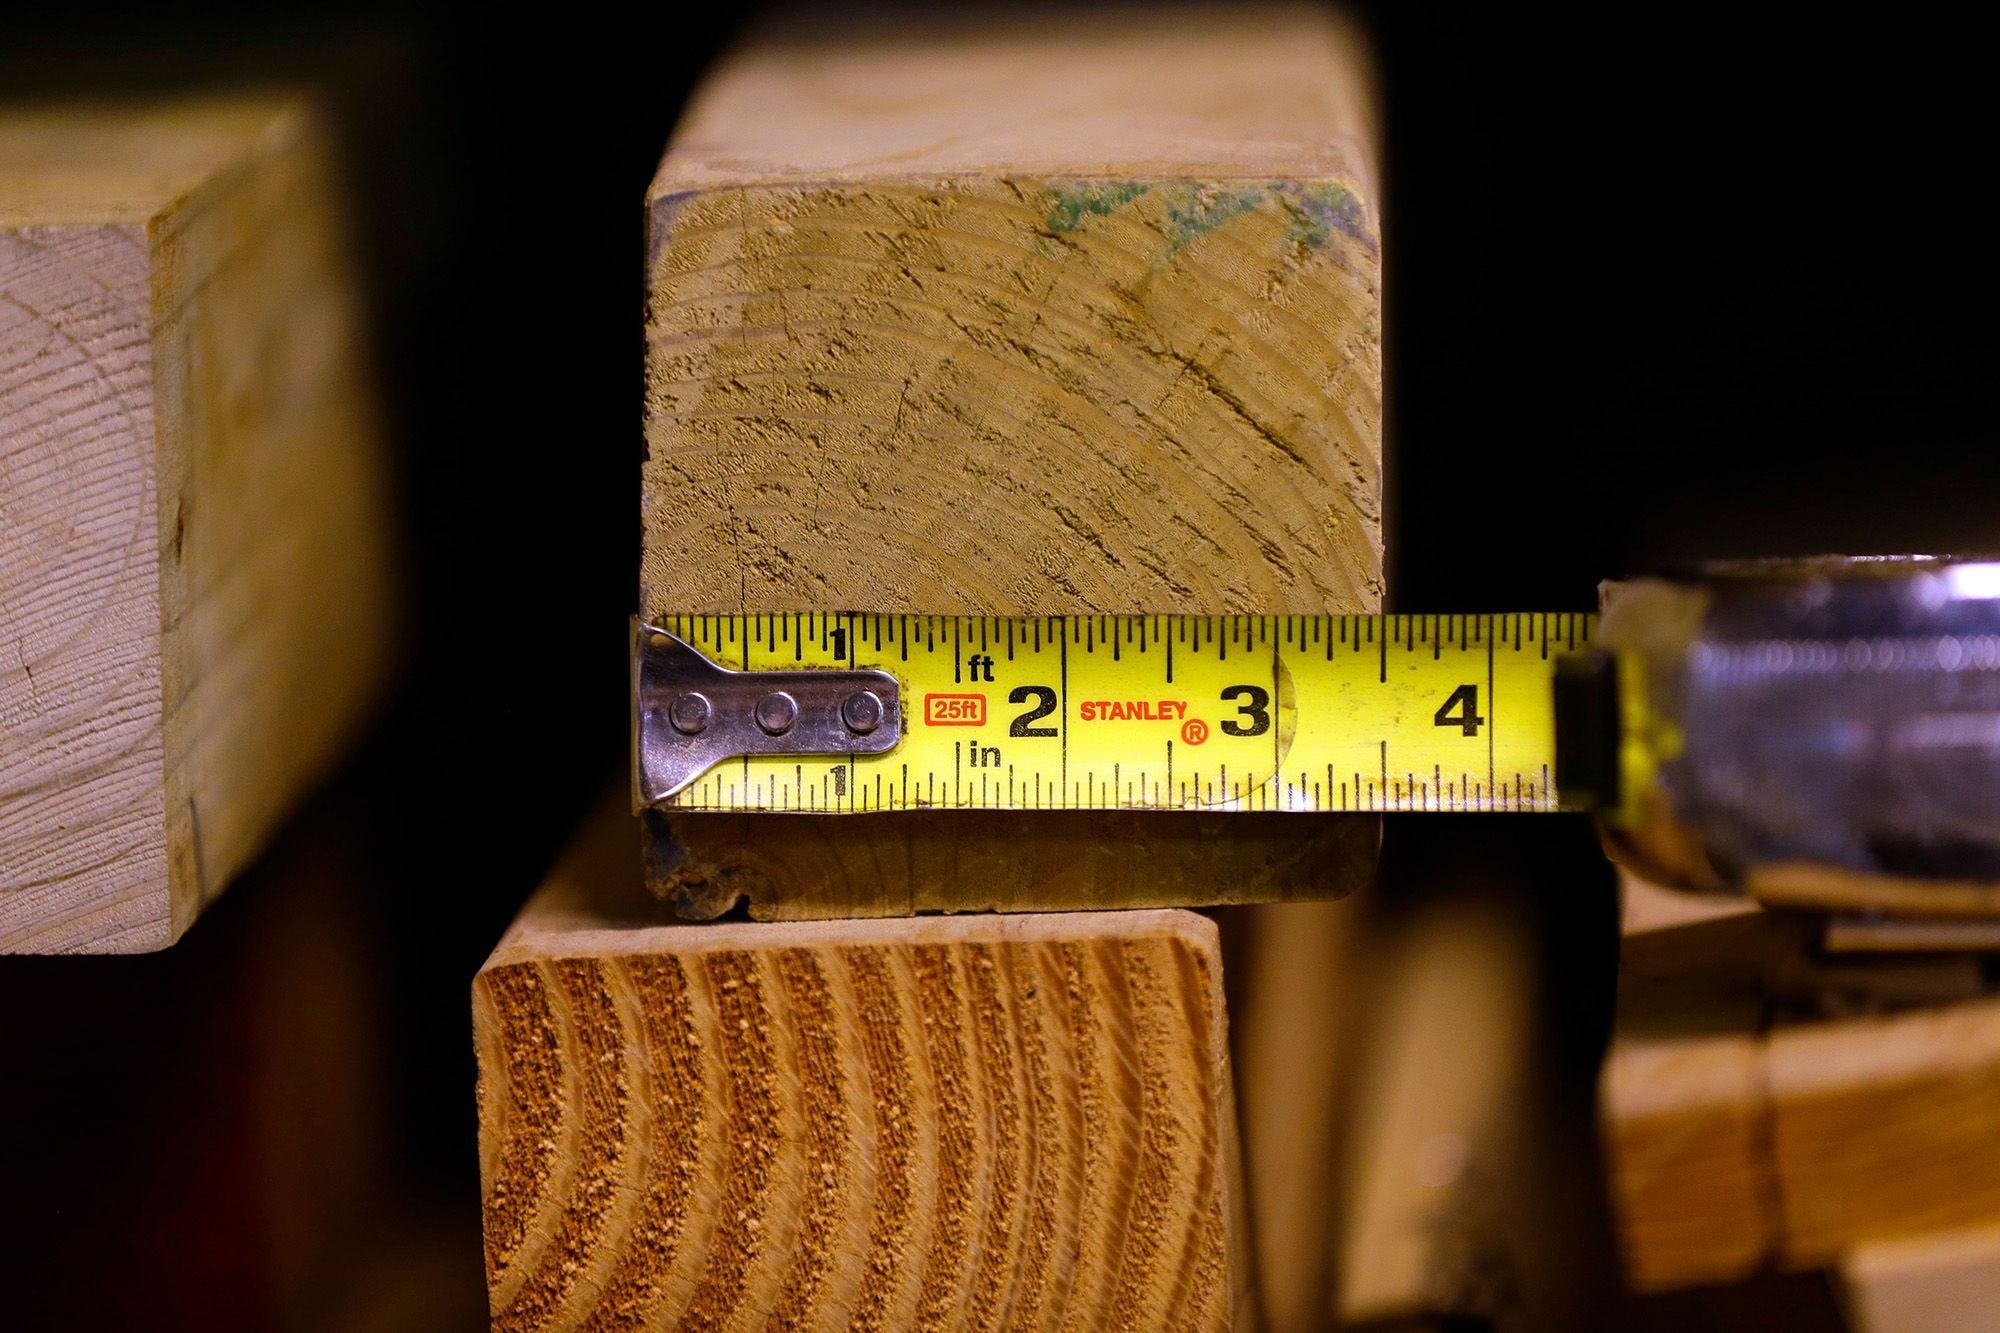 Home Depot, Menards face lawsuits over lumber size description